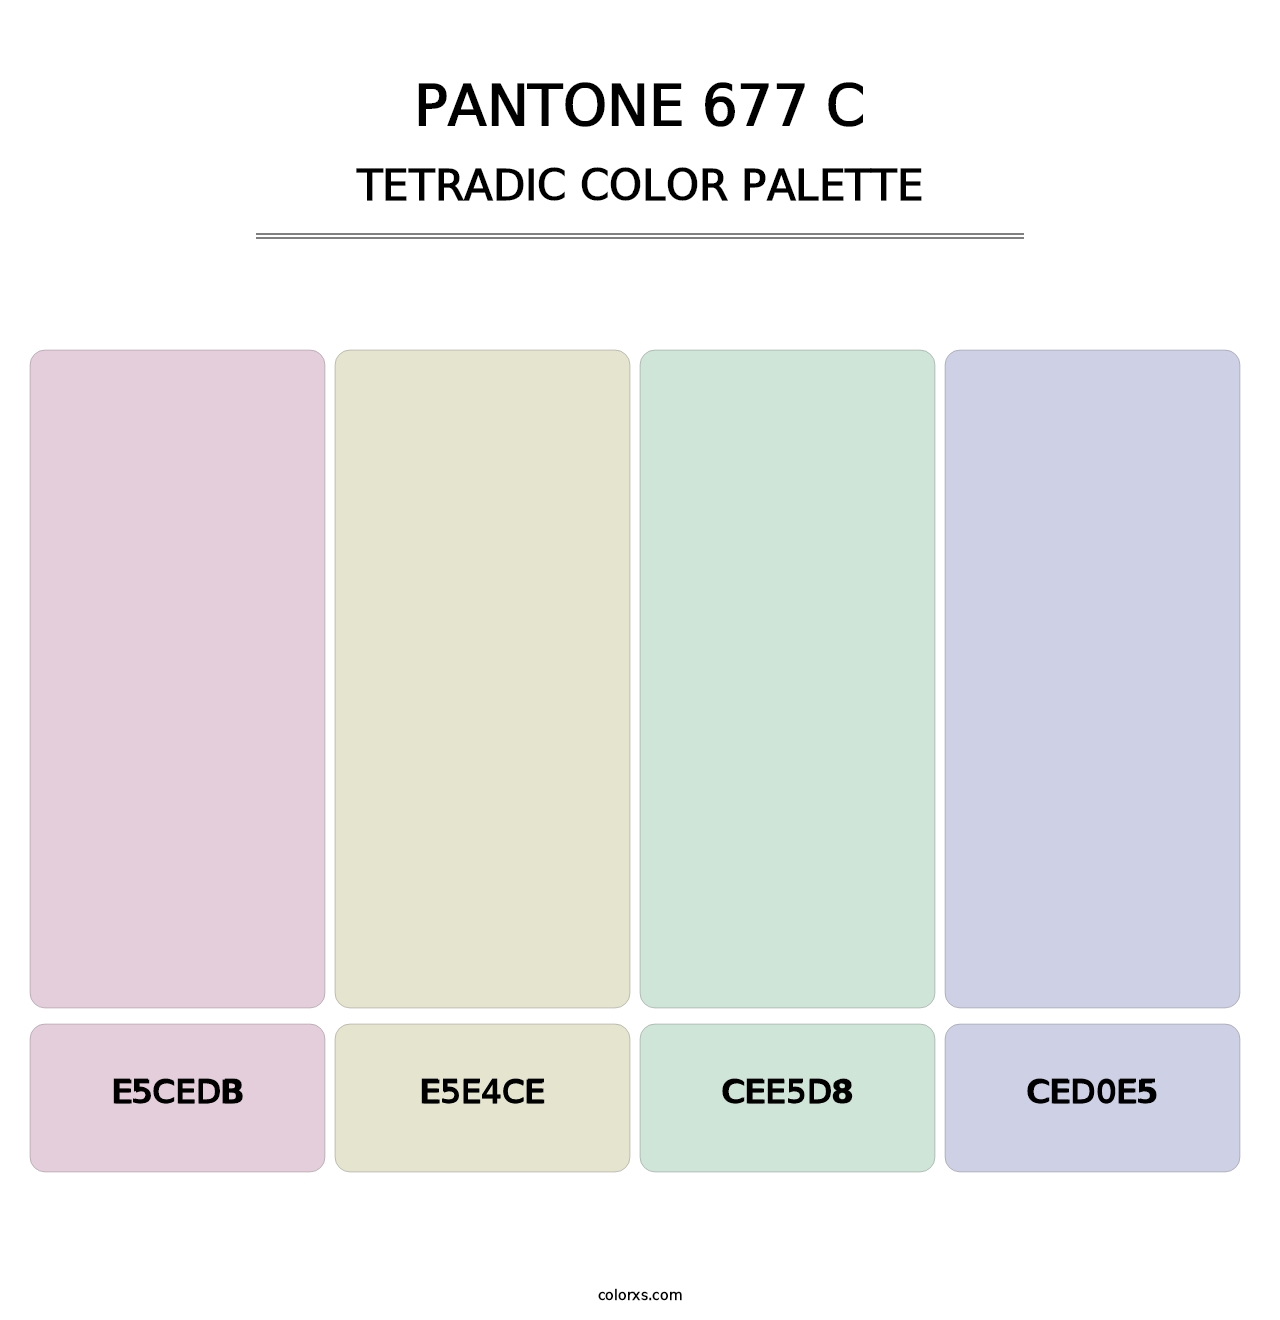 PANTONE 677 C - Tetradic Color Palette